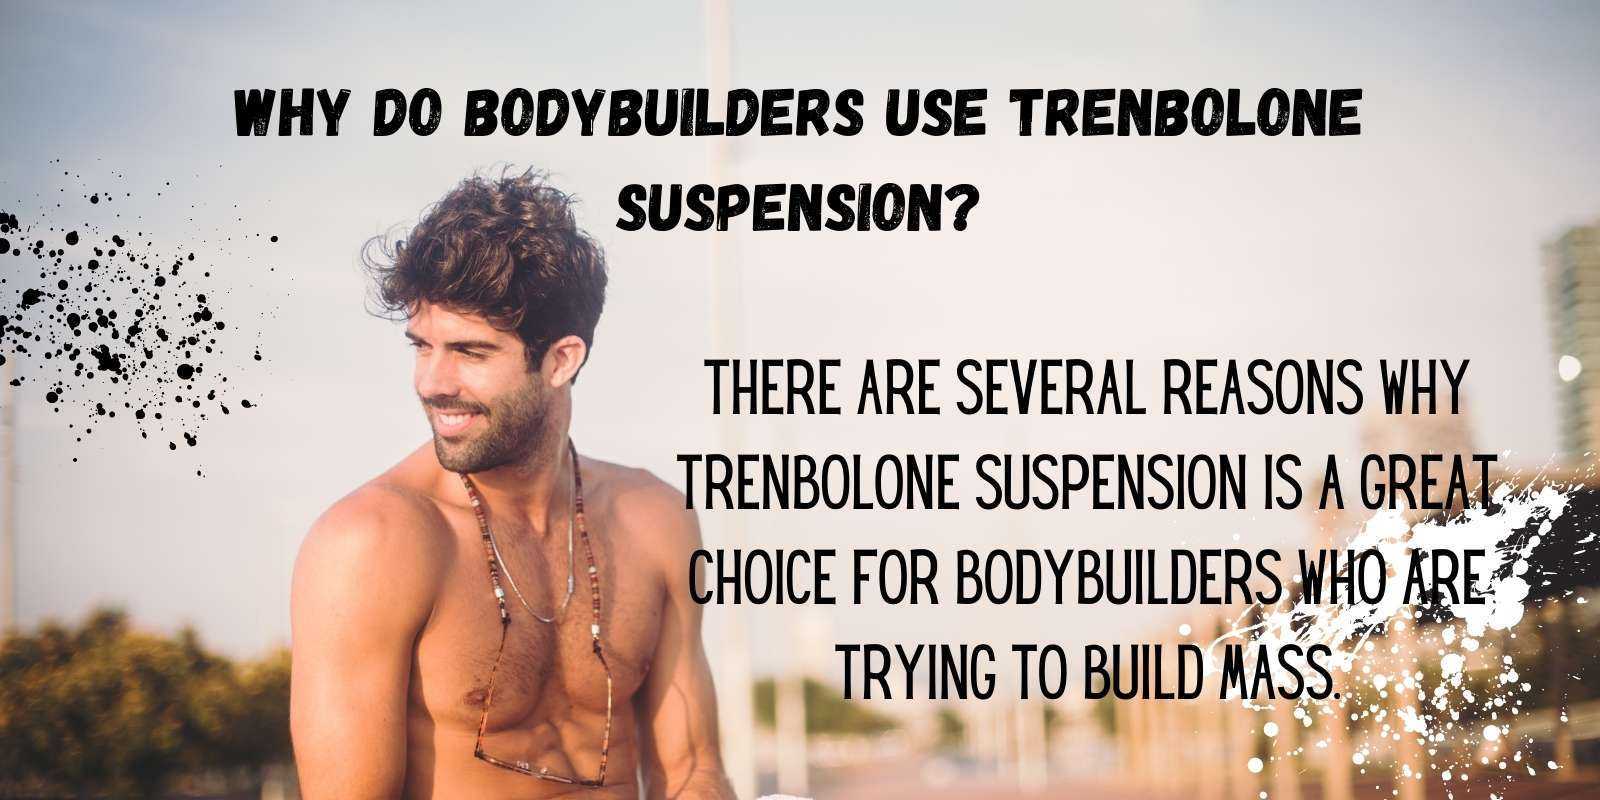 Why do bodybuilders use Trenbolone Suspension?